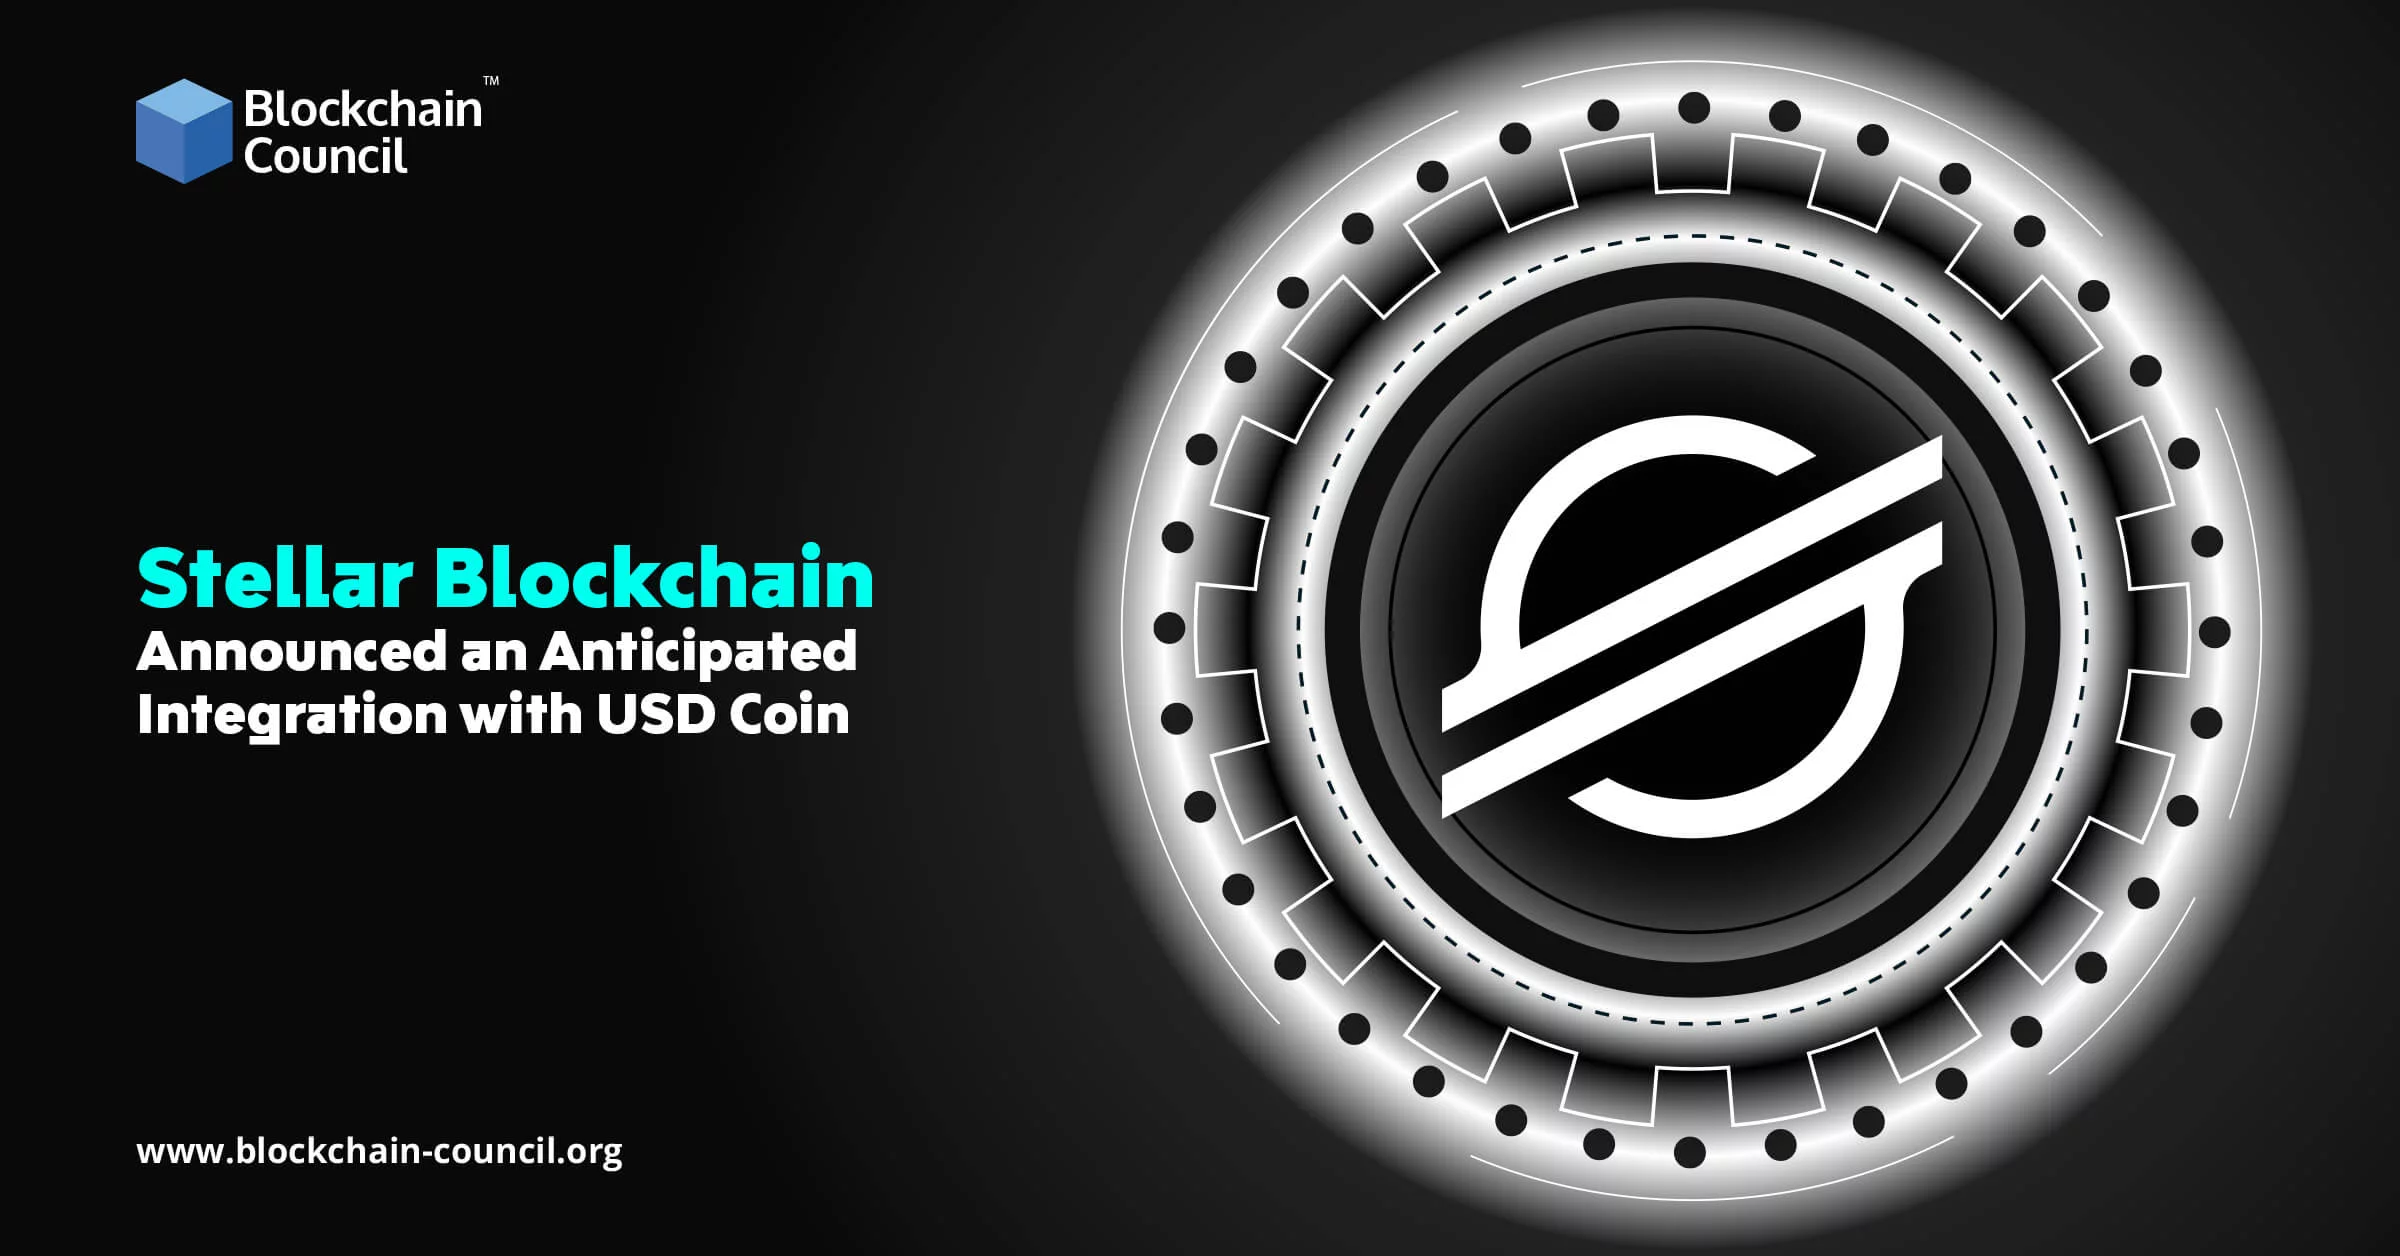 Stellar Blockchain Announced an Anticipated Integration with USD Coin